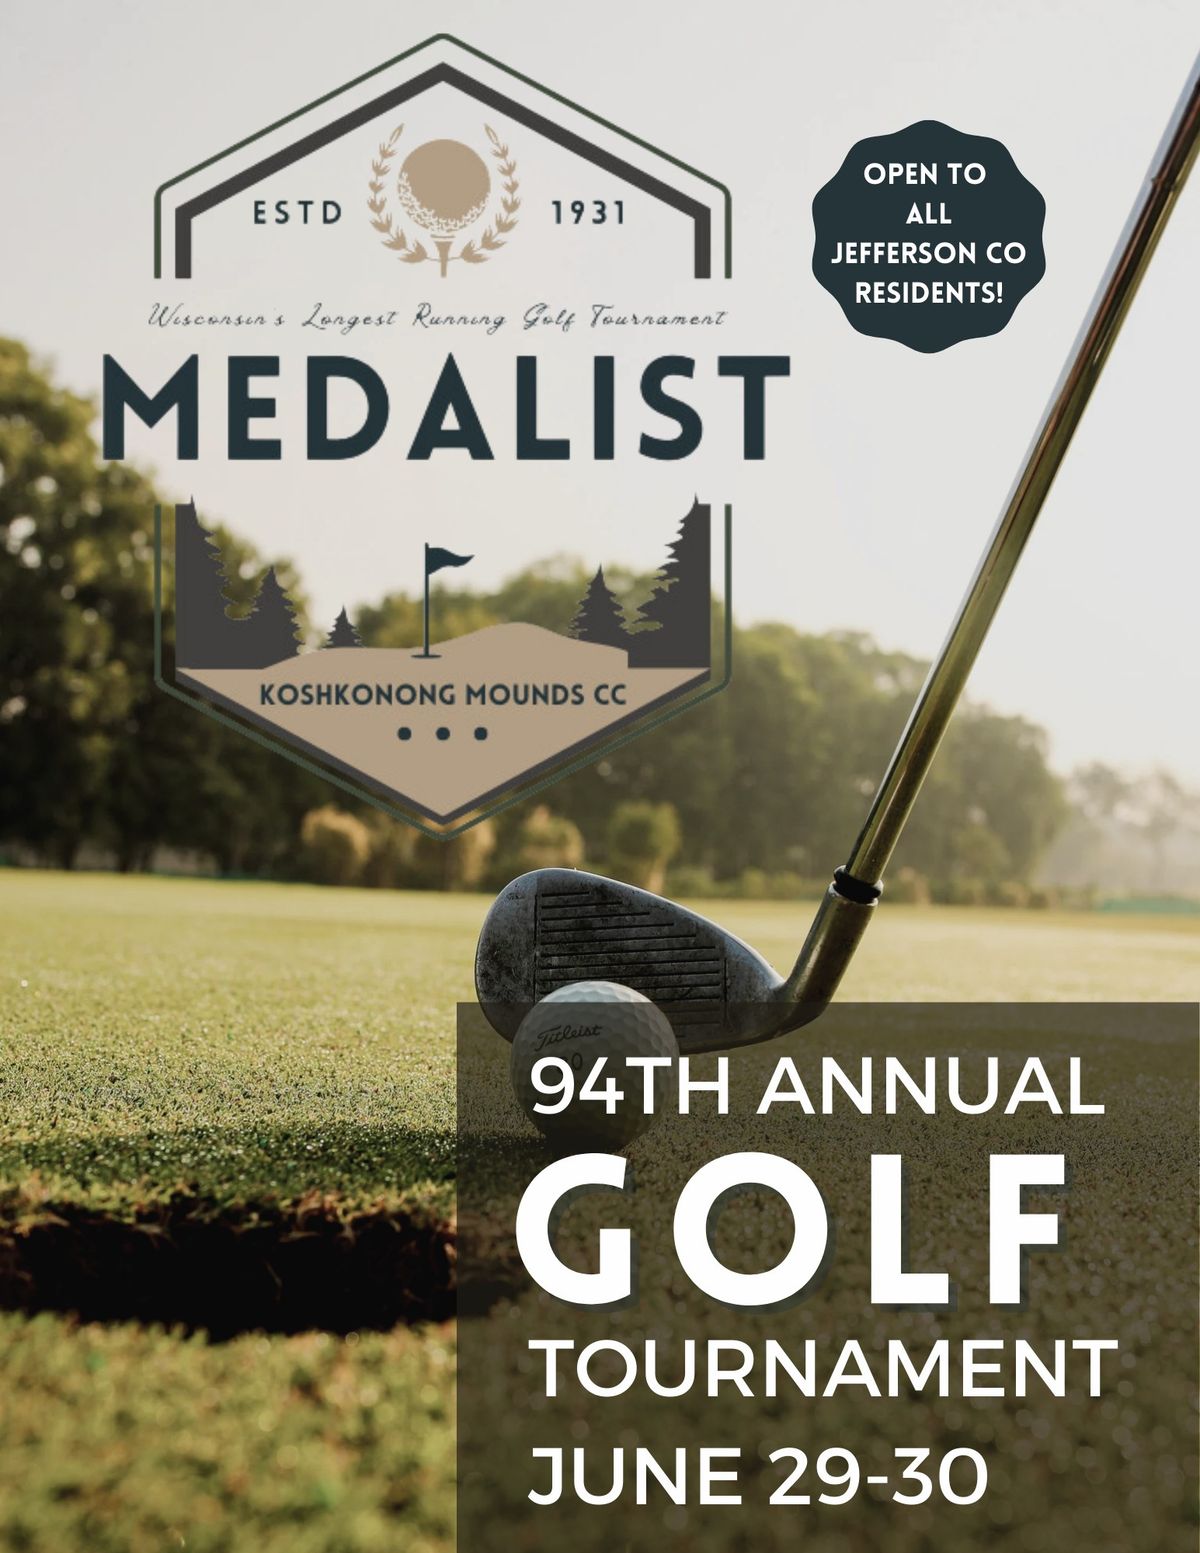 Jefferson County Golf Tournament: Medalist Championship